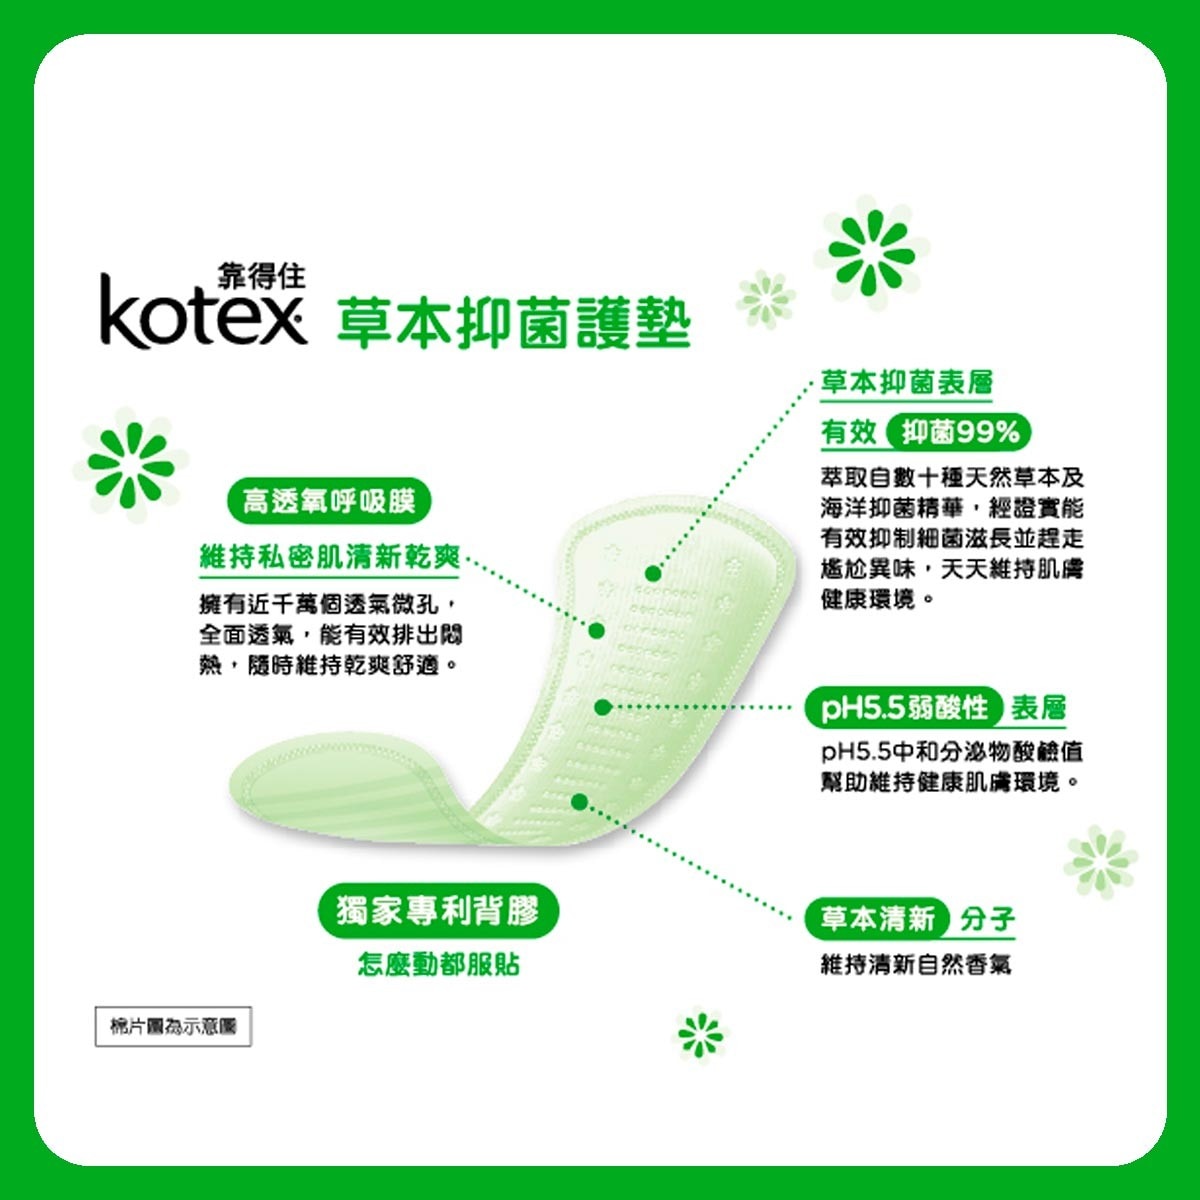 KOTEX 靠得住草本抑菌護墊，高透氧呼吸膜，維持私密肌清新乾爽，草本抑菌表層，有效抑菌99％，獨家專利背膠，pH5.5弱酸性表層，草本清新分子。